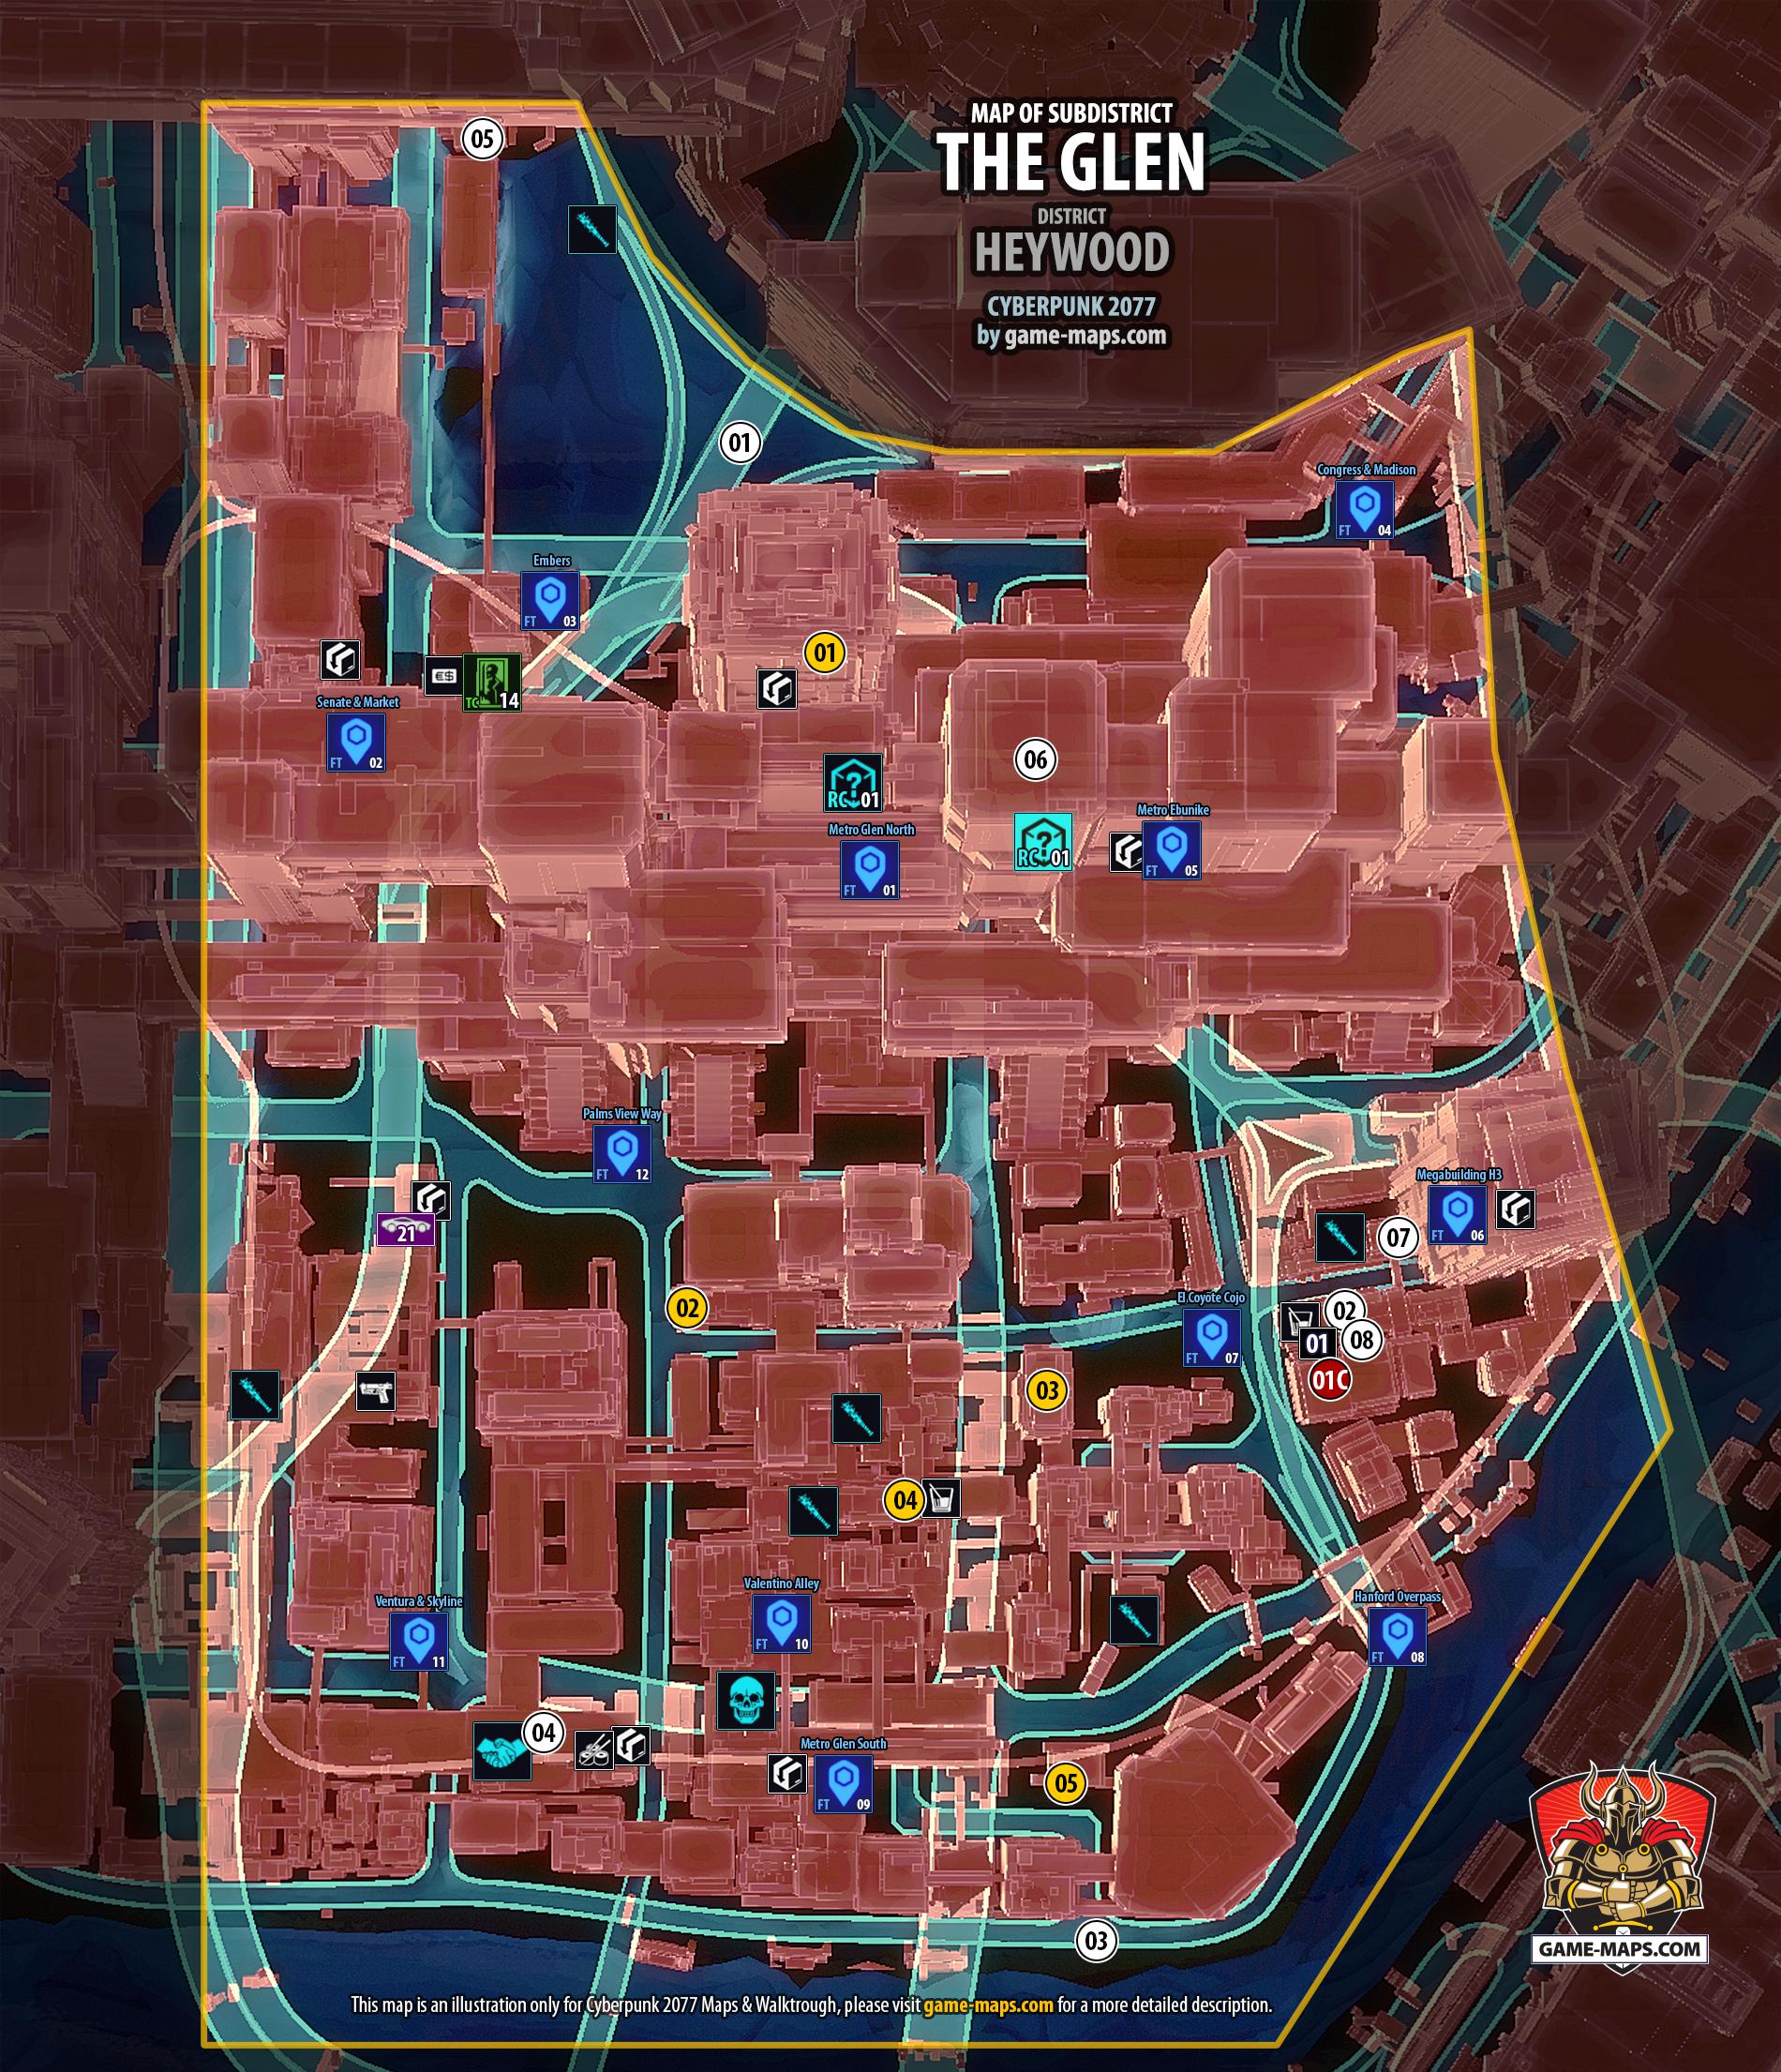 The Glen Map in Heywood District - Cyberpunk 2077